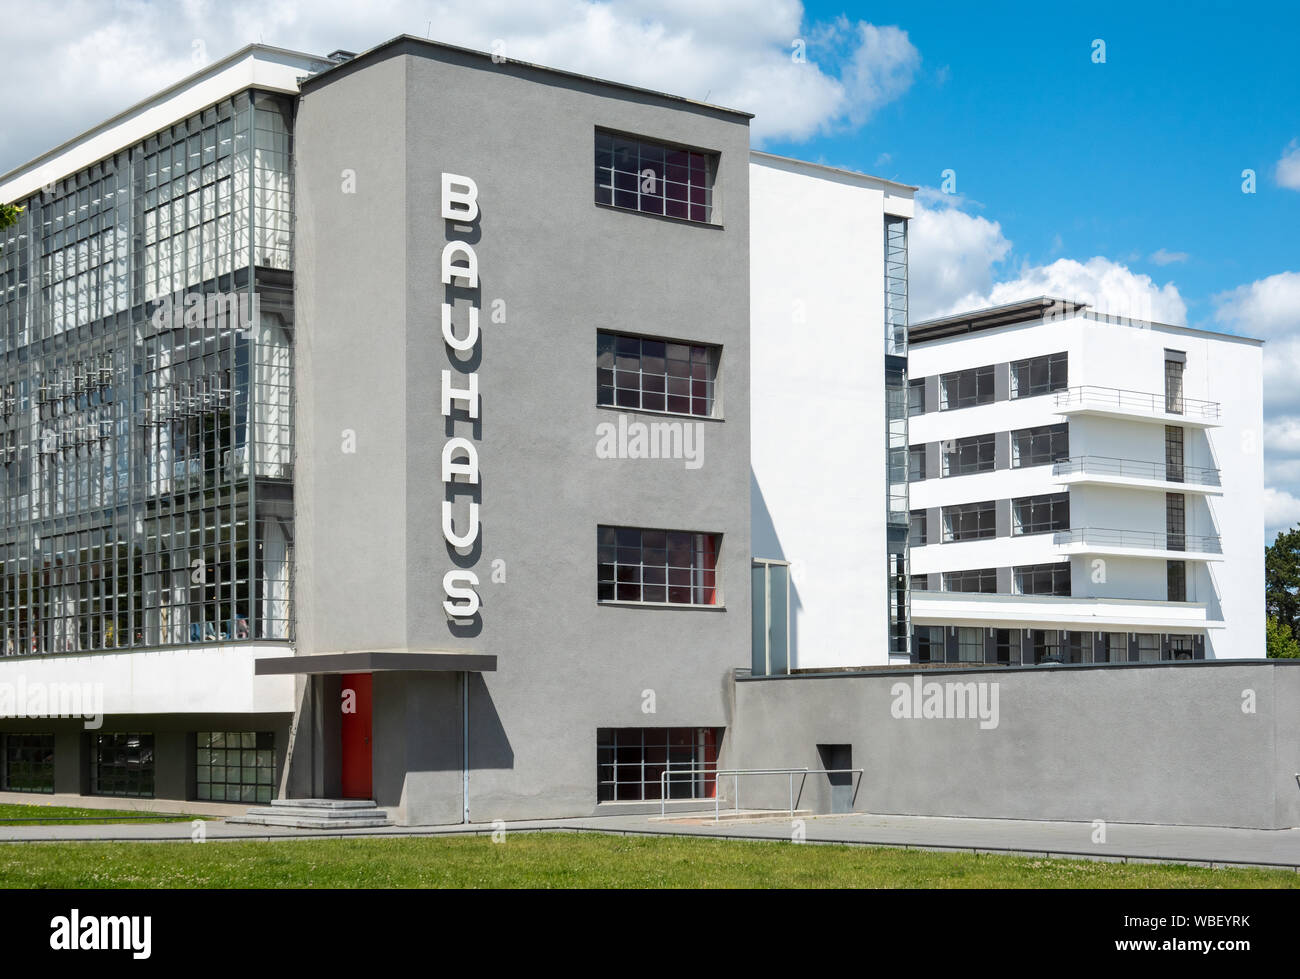 Bauhaus Dessau exterior. The Bauhaus building in Dessau Germany, Designed by Walter Gropius in 1925 1926. Unesco World Heritage site. Stock Photo